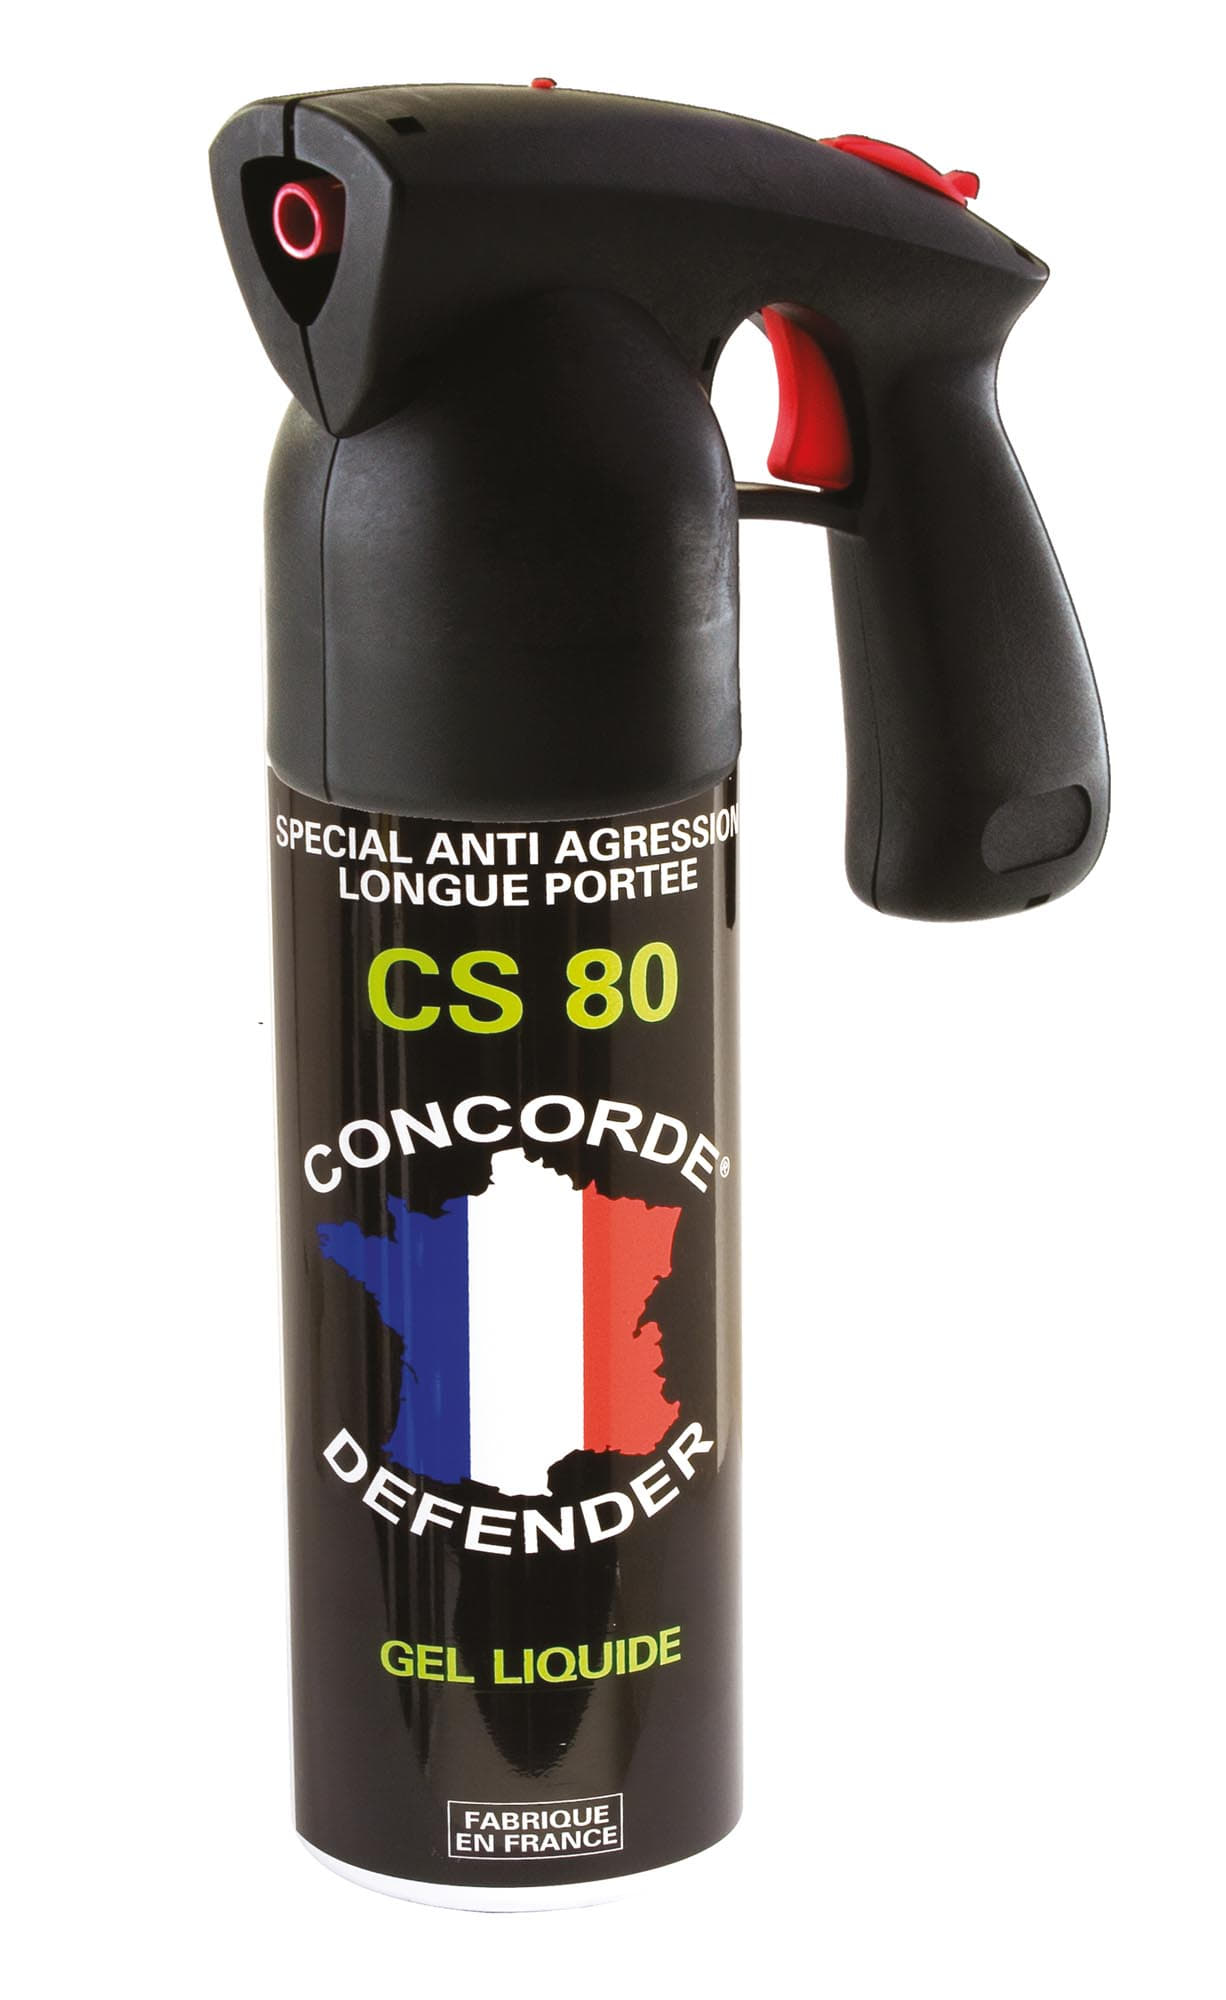 Bombe lacrymogene Concorde Defender CS 80 - L'armurerie française